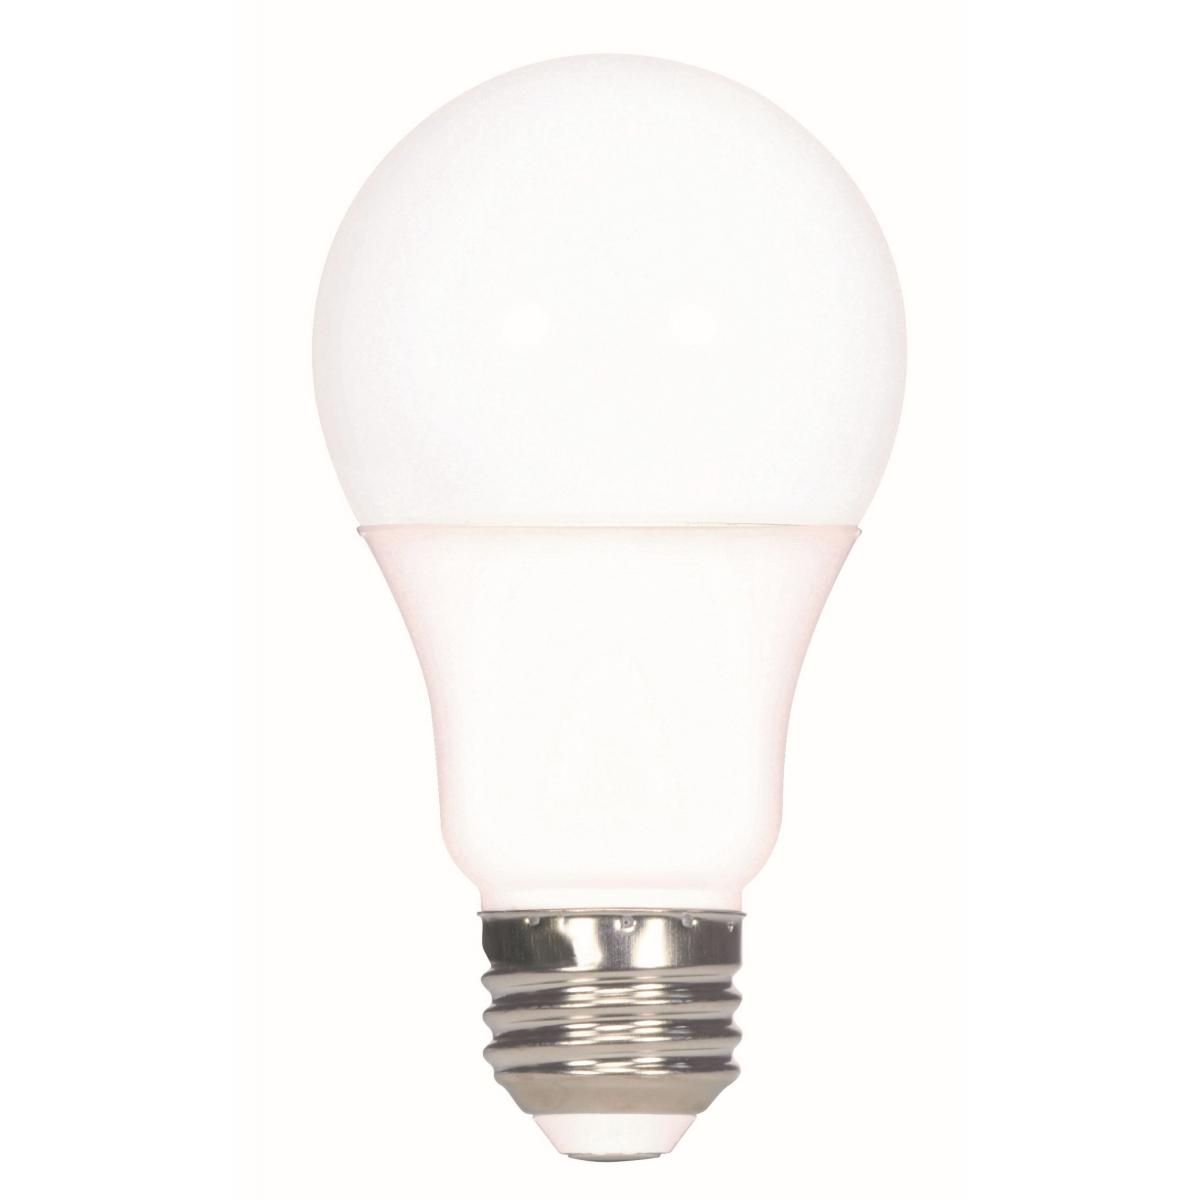 A19 LED Bulb, 100W Equivalent, 9 Watt, 800 Lumens, 2700K, E26 Medium Base, Frosted Finish